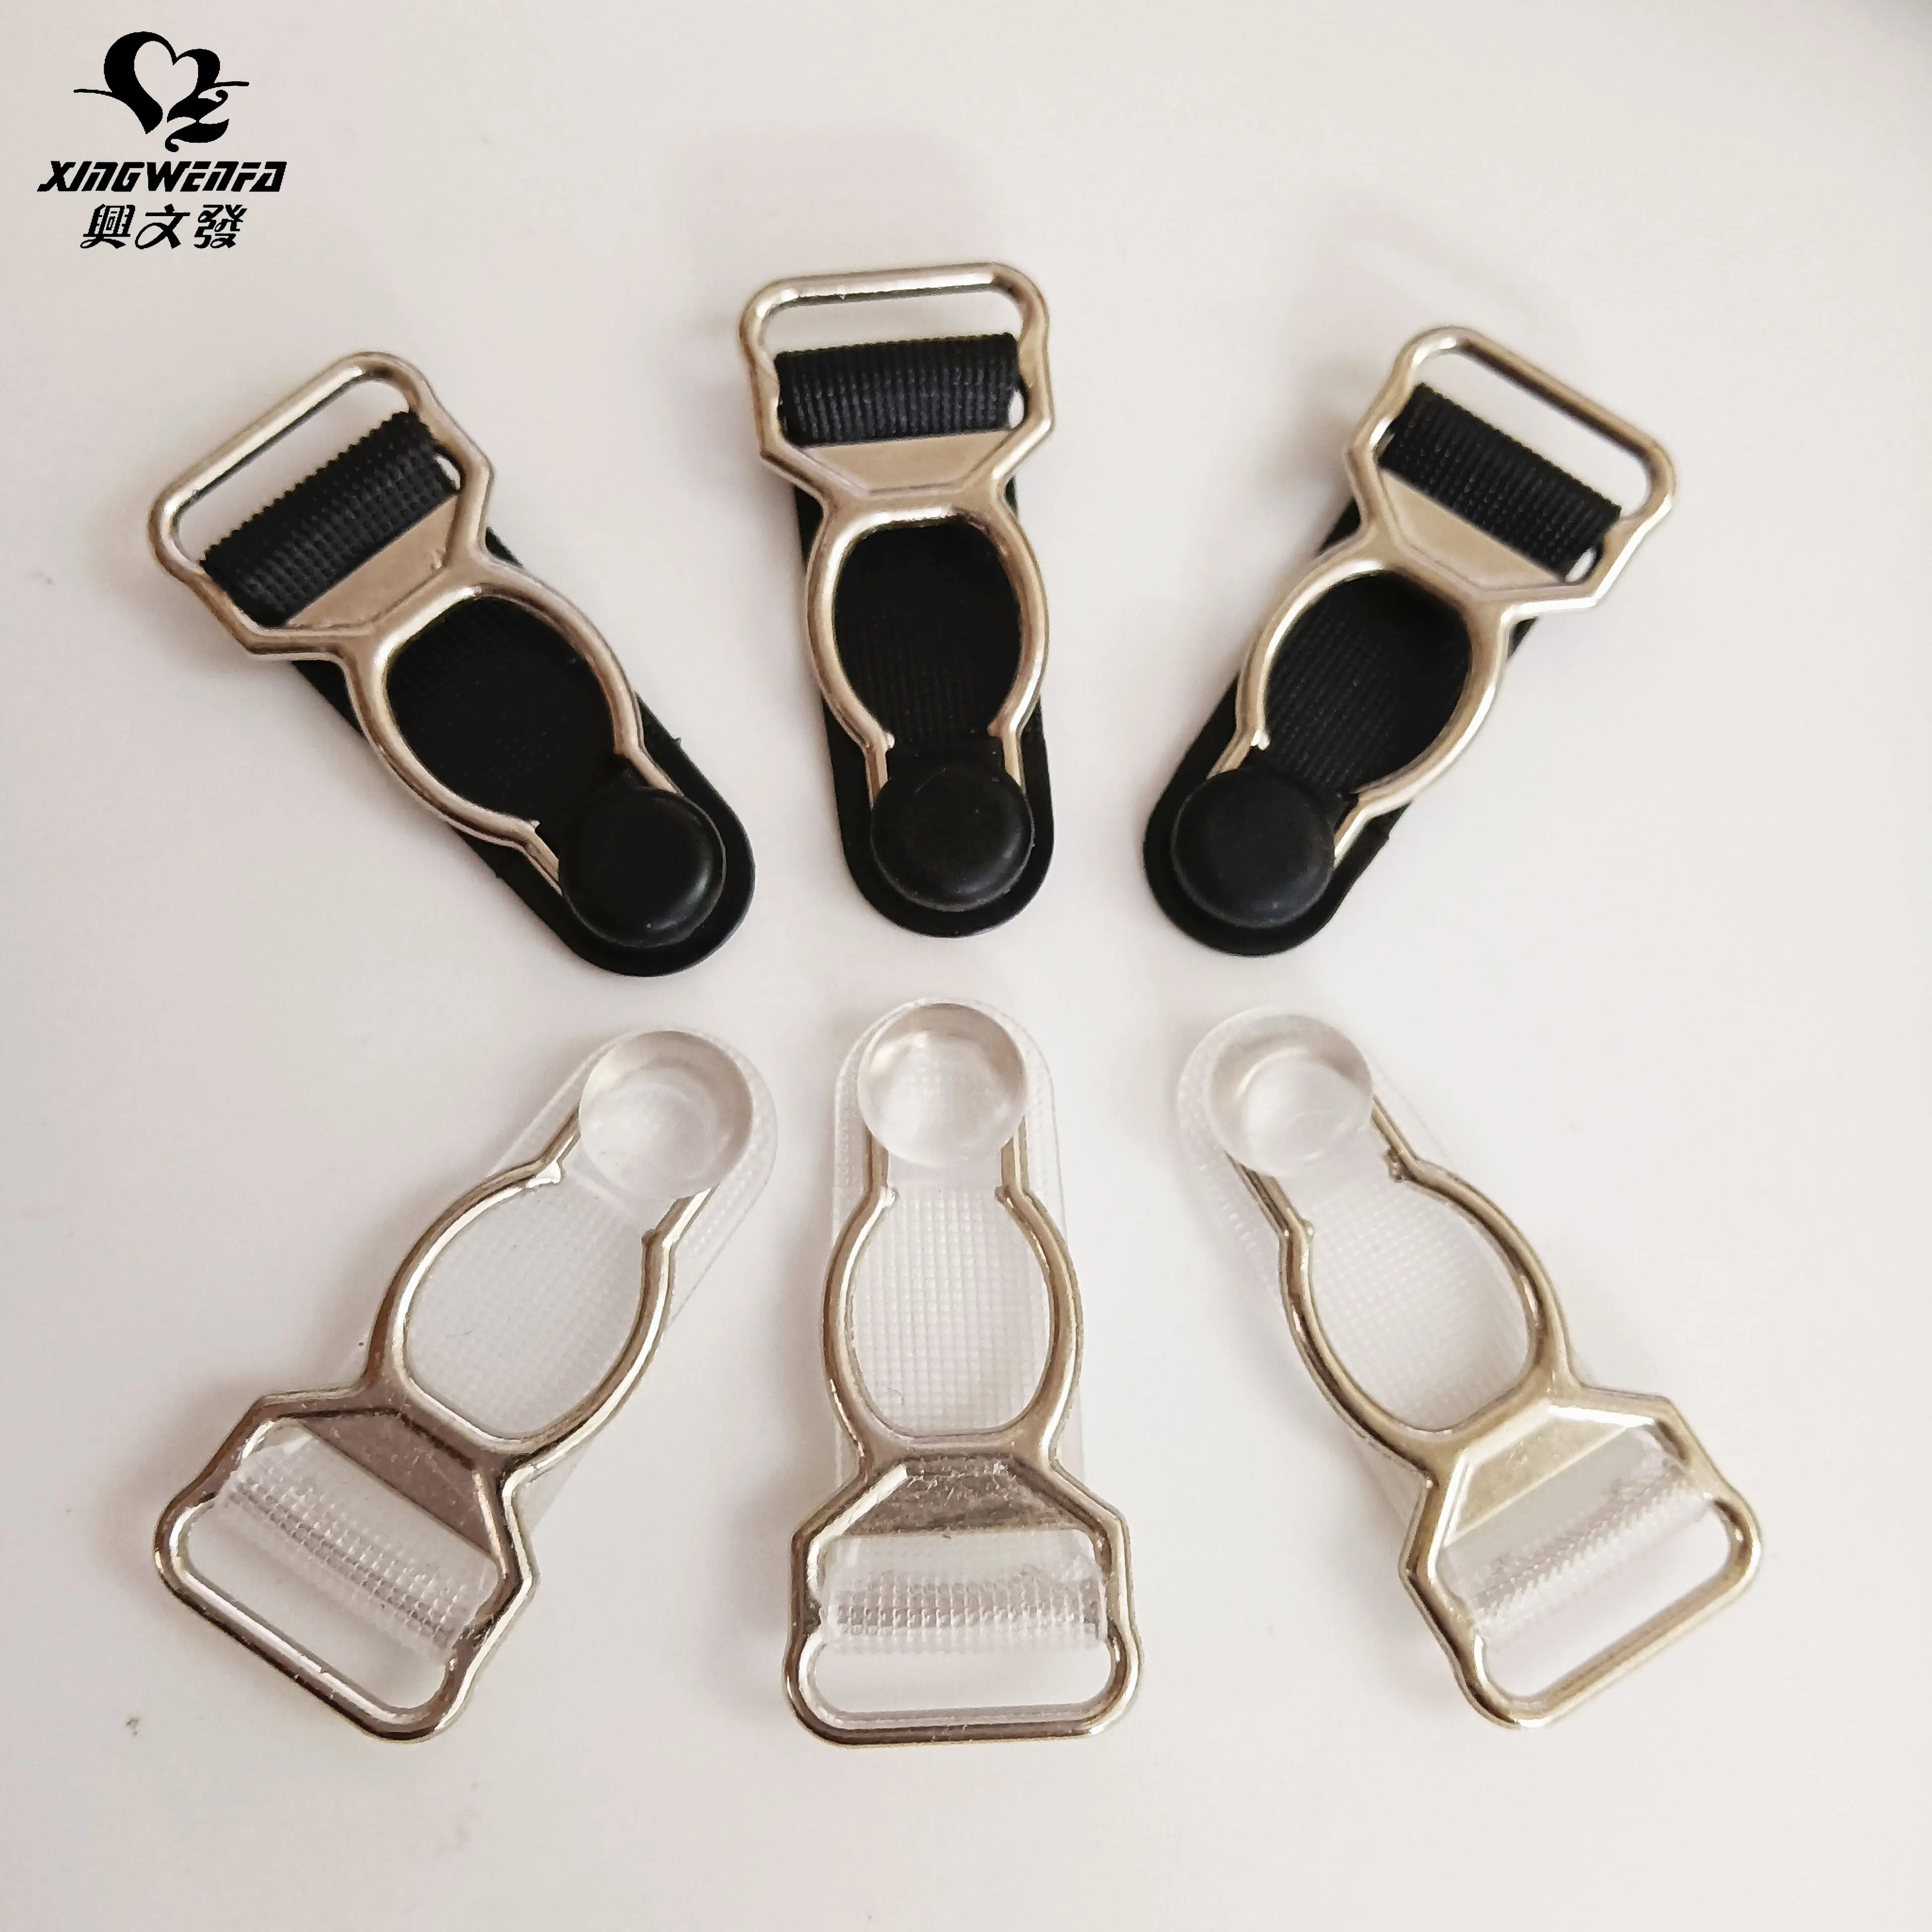 12mm silver Zinc alloy suspender clip garter belt hook clip